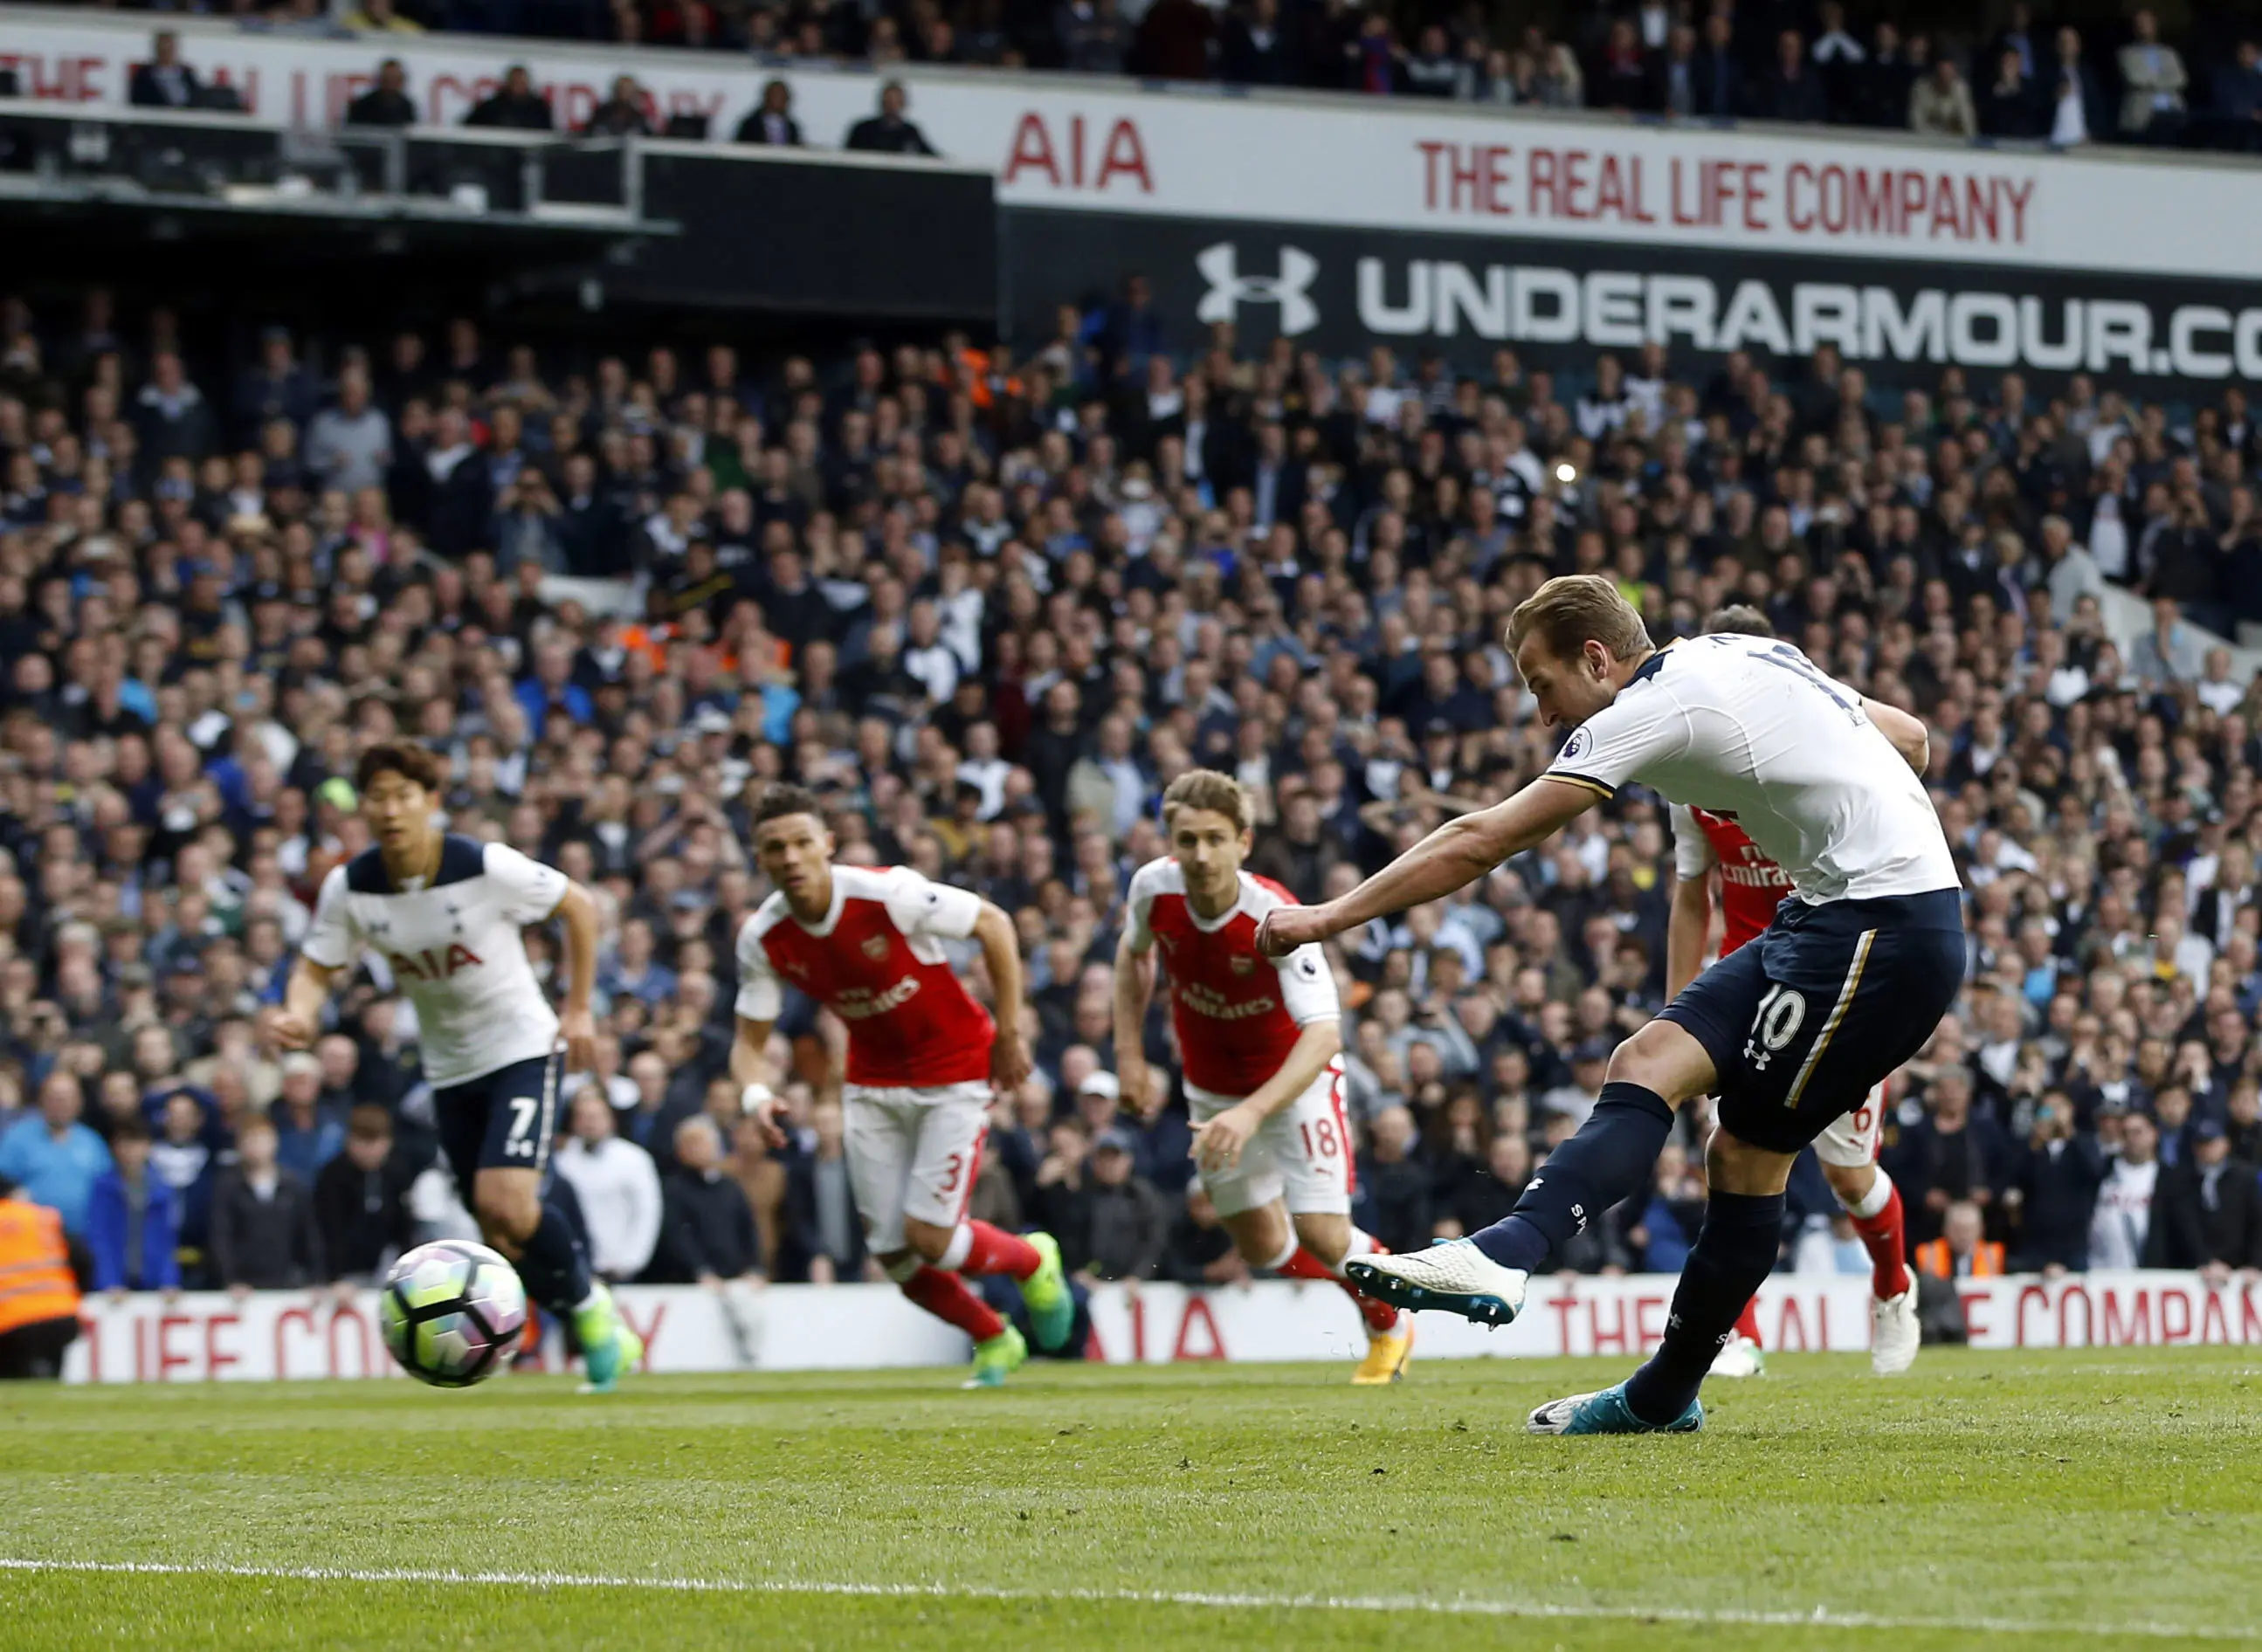 Penyerang Tottenham Hotspur Harry Kane mengeksekusi penalti untuk merobek gawang Arsenal di White Hart Lane, Minggu (30/4/2017). Arsenal kalah 0-2. (AP Photo/Alastair Grant)